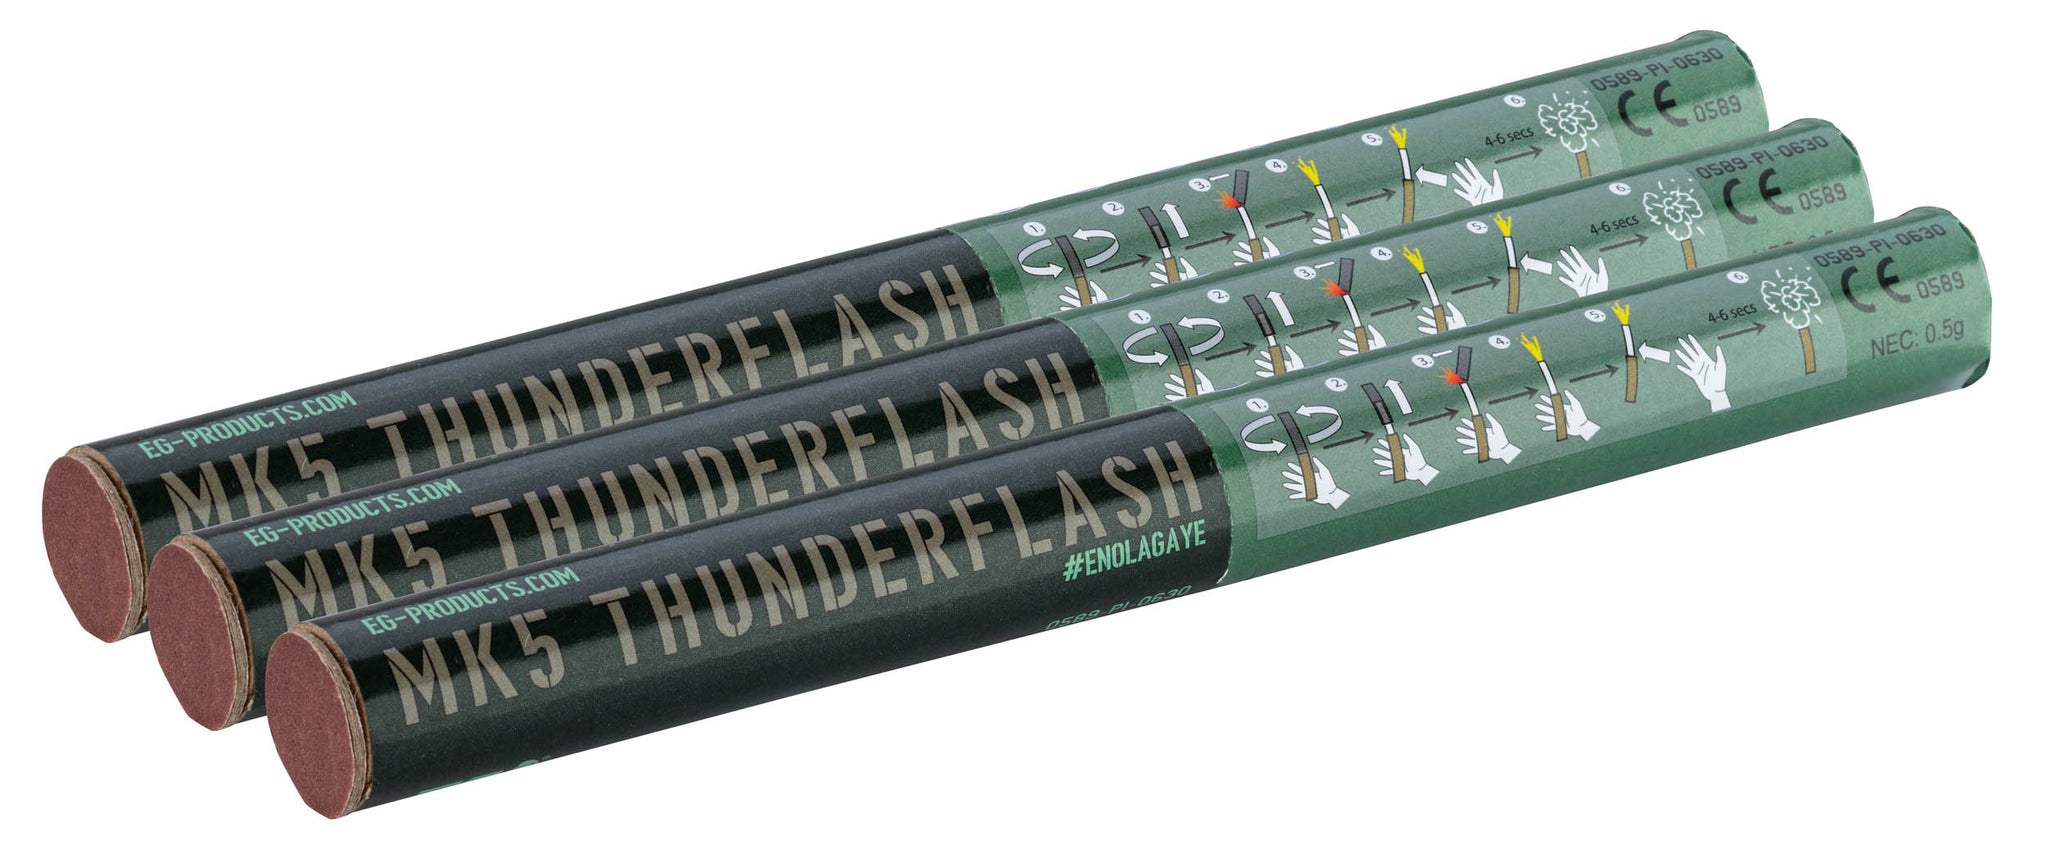 Enola Gaye MK5 Thunderflash - Pack of 15